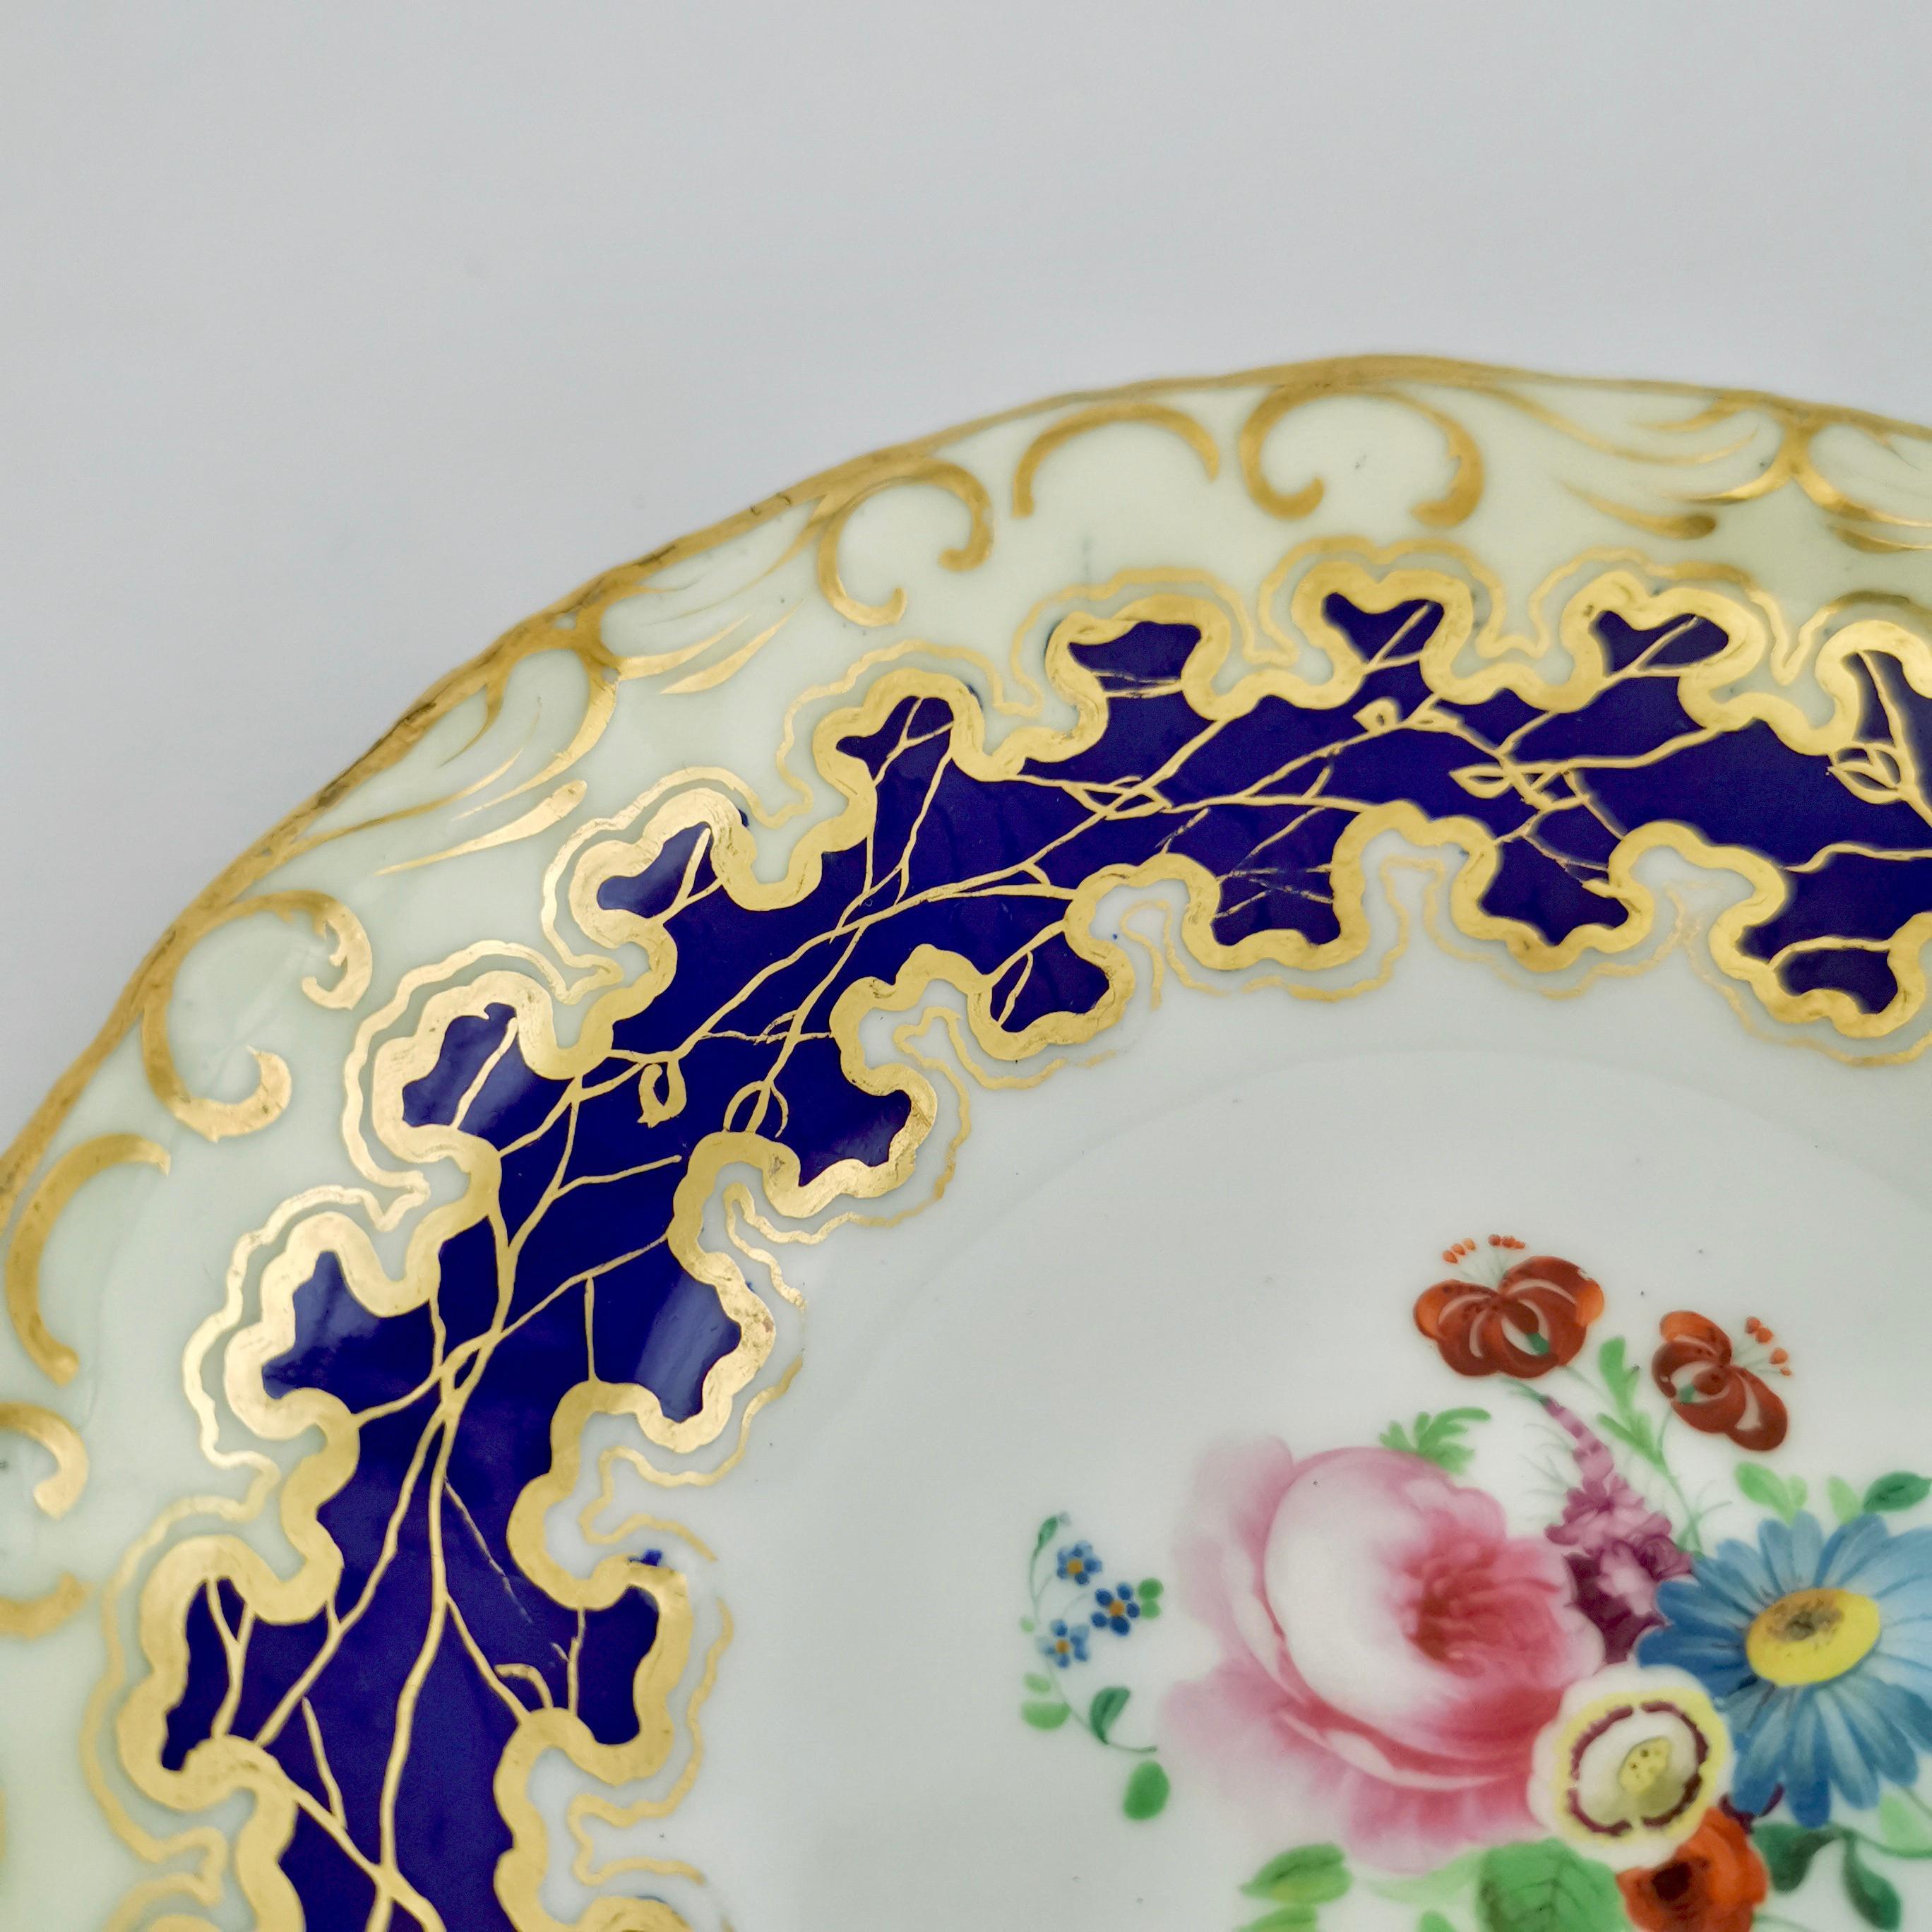 Grainger Worcester Porcelain Teacup, Cobalt Blue, Gilt and Flowers, circa 1840 2